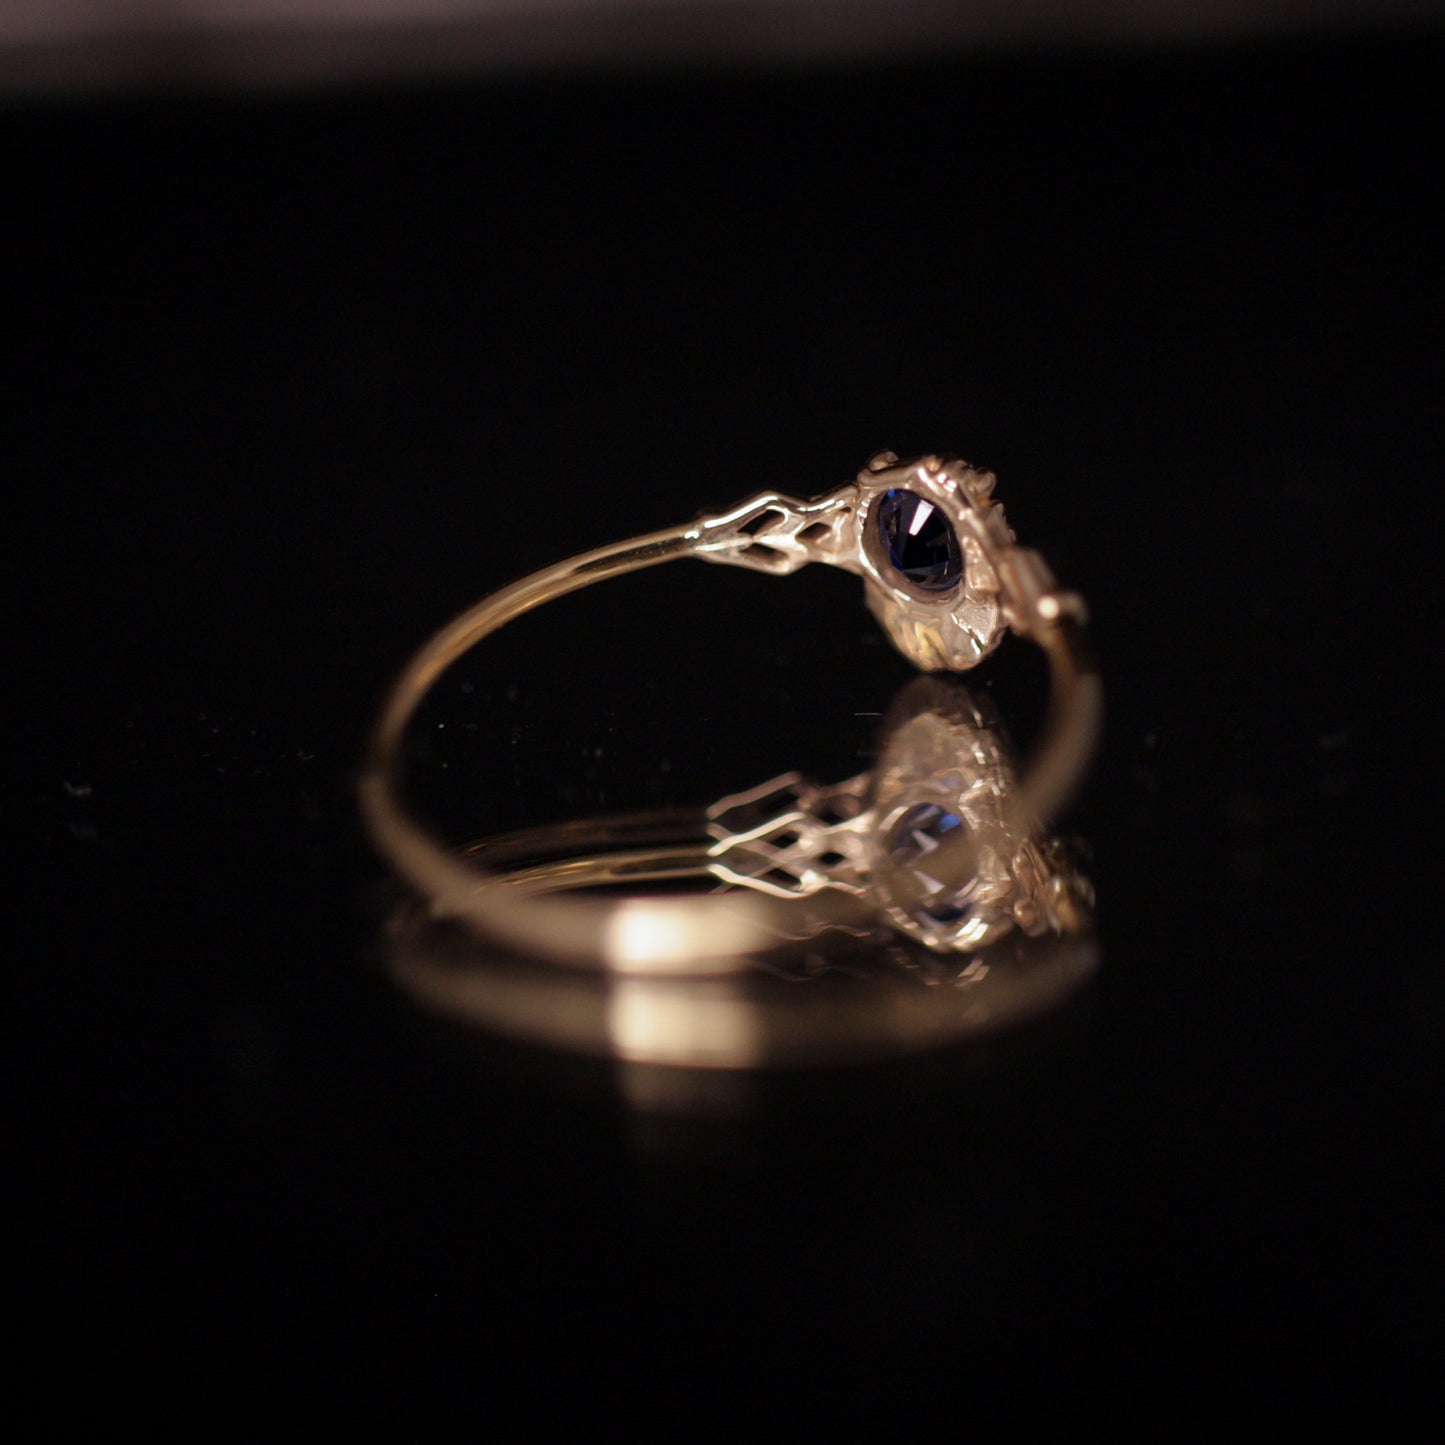 676 Blue Sapphire Ring